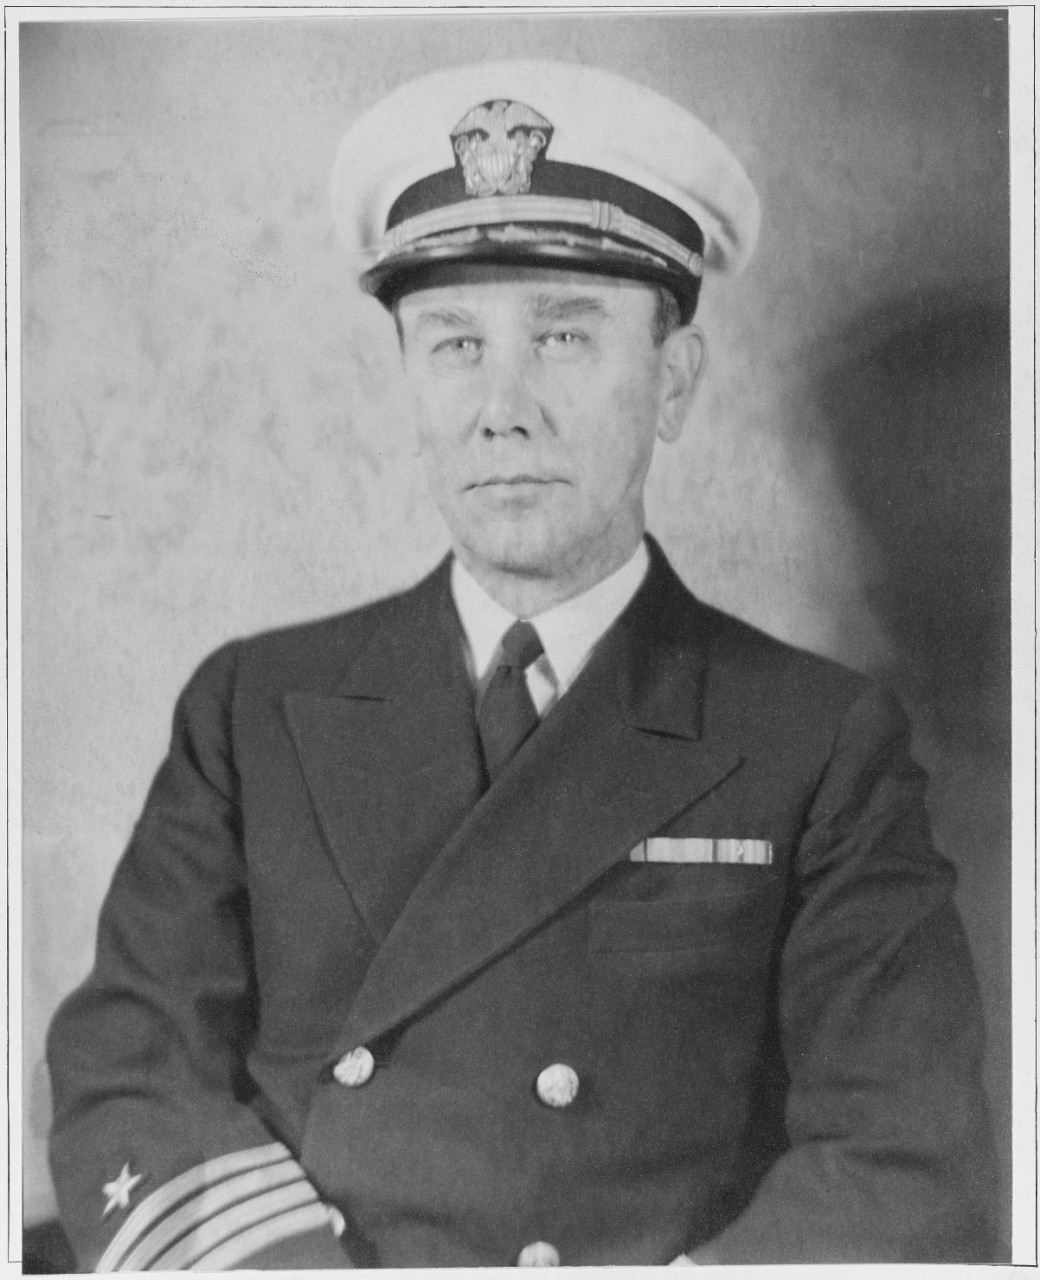 Captain Cortlandt C. Baughman, USN